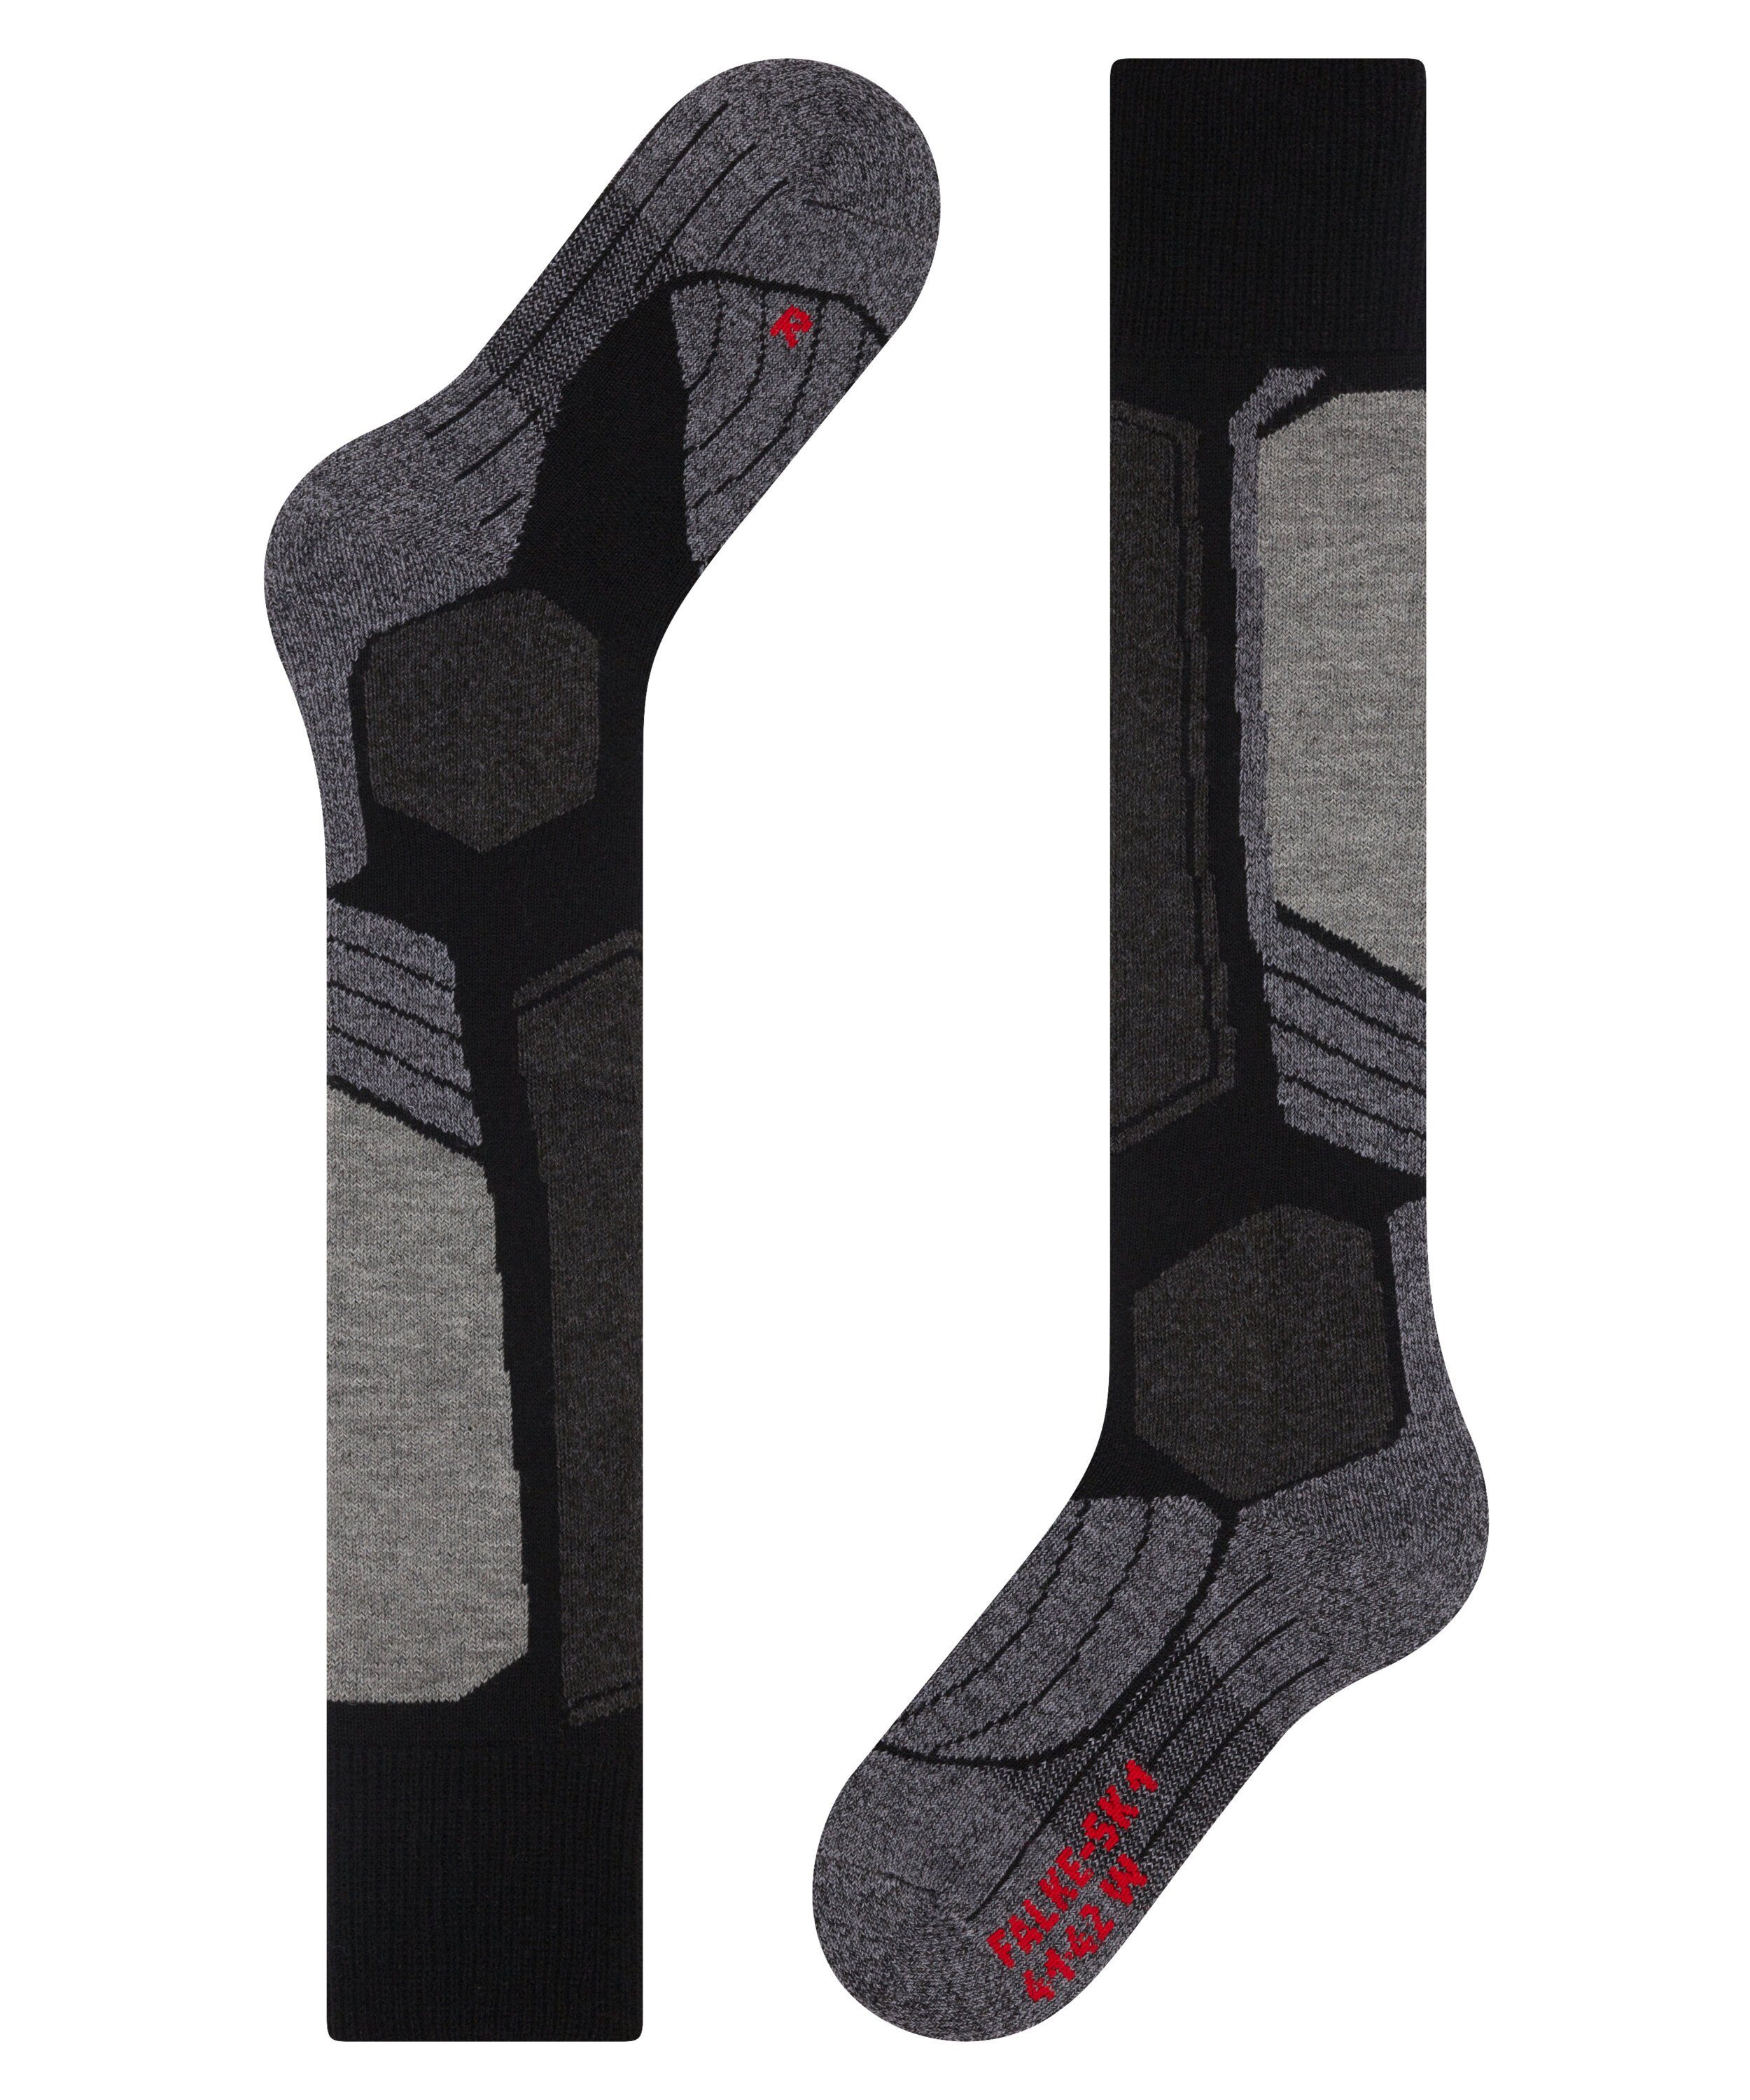 Skisocken SK1 hohen für FALKE Komfort Polsterung black-mix (1-Paar) maximale (3010) Comfort